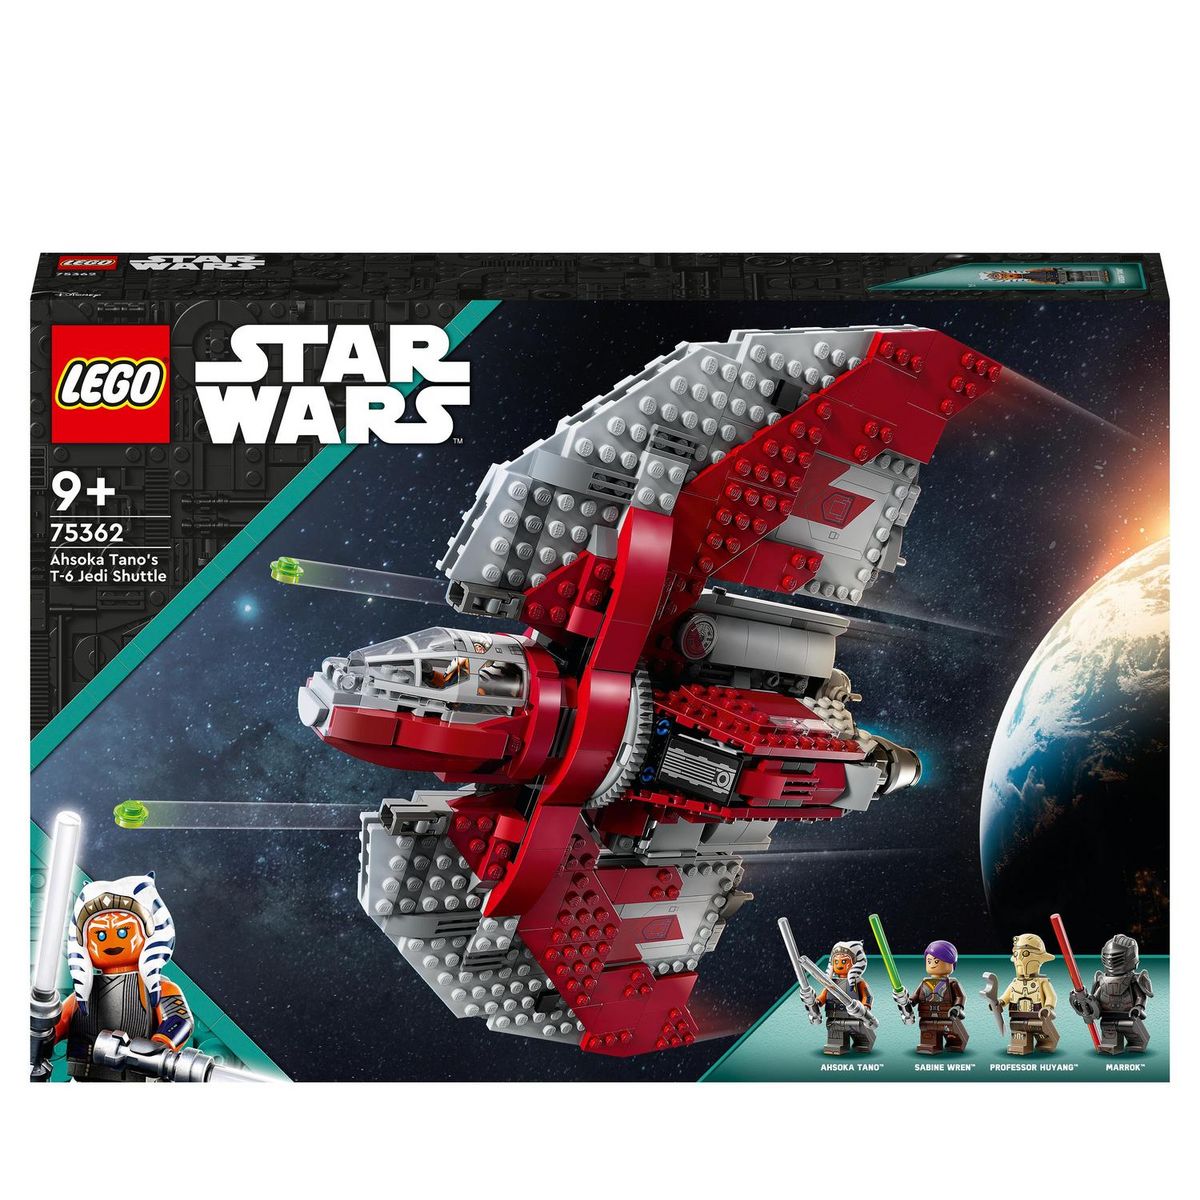 LEGO se paye les personnages de Star Wars - IDBOOX